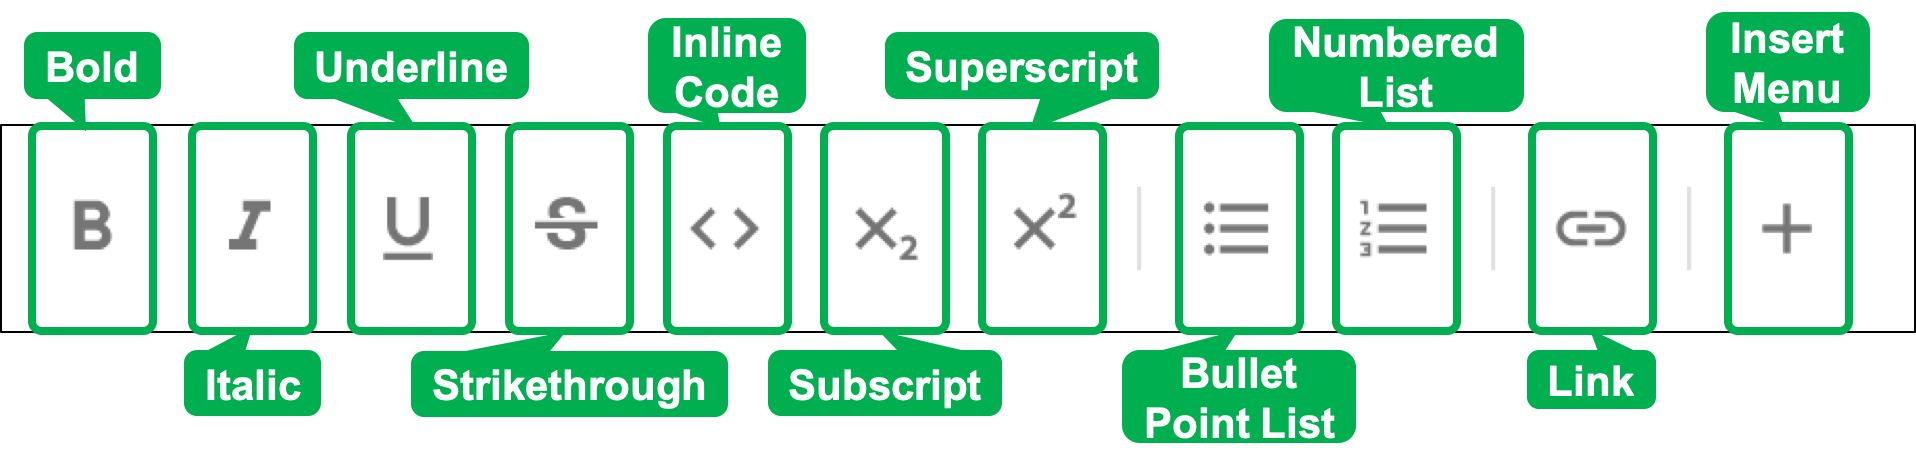 Bold, Italic, Underline, Strikethrough, code, subscript2, superscript2, lists, and links.